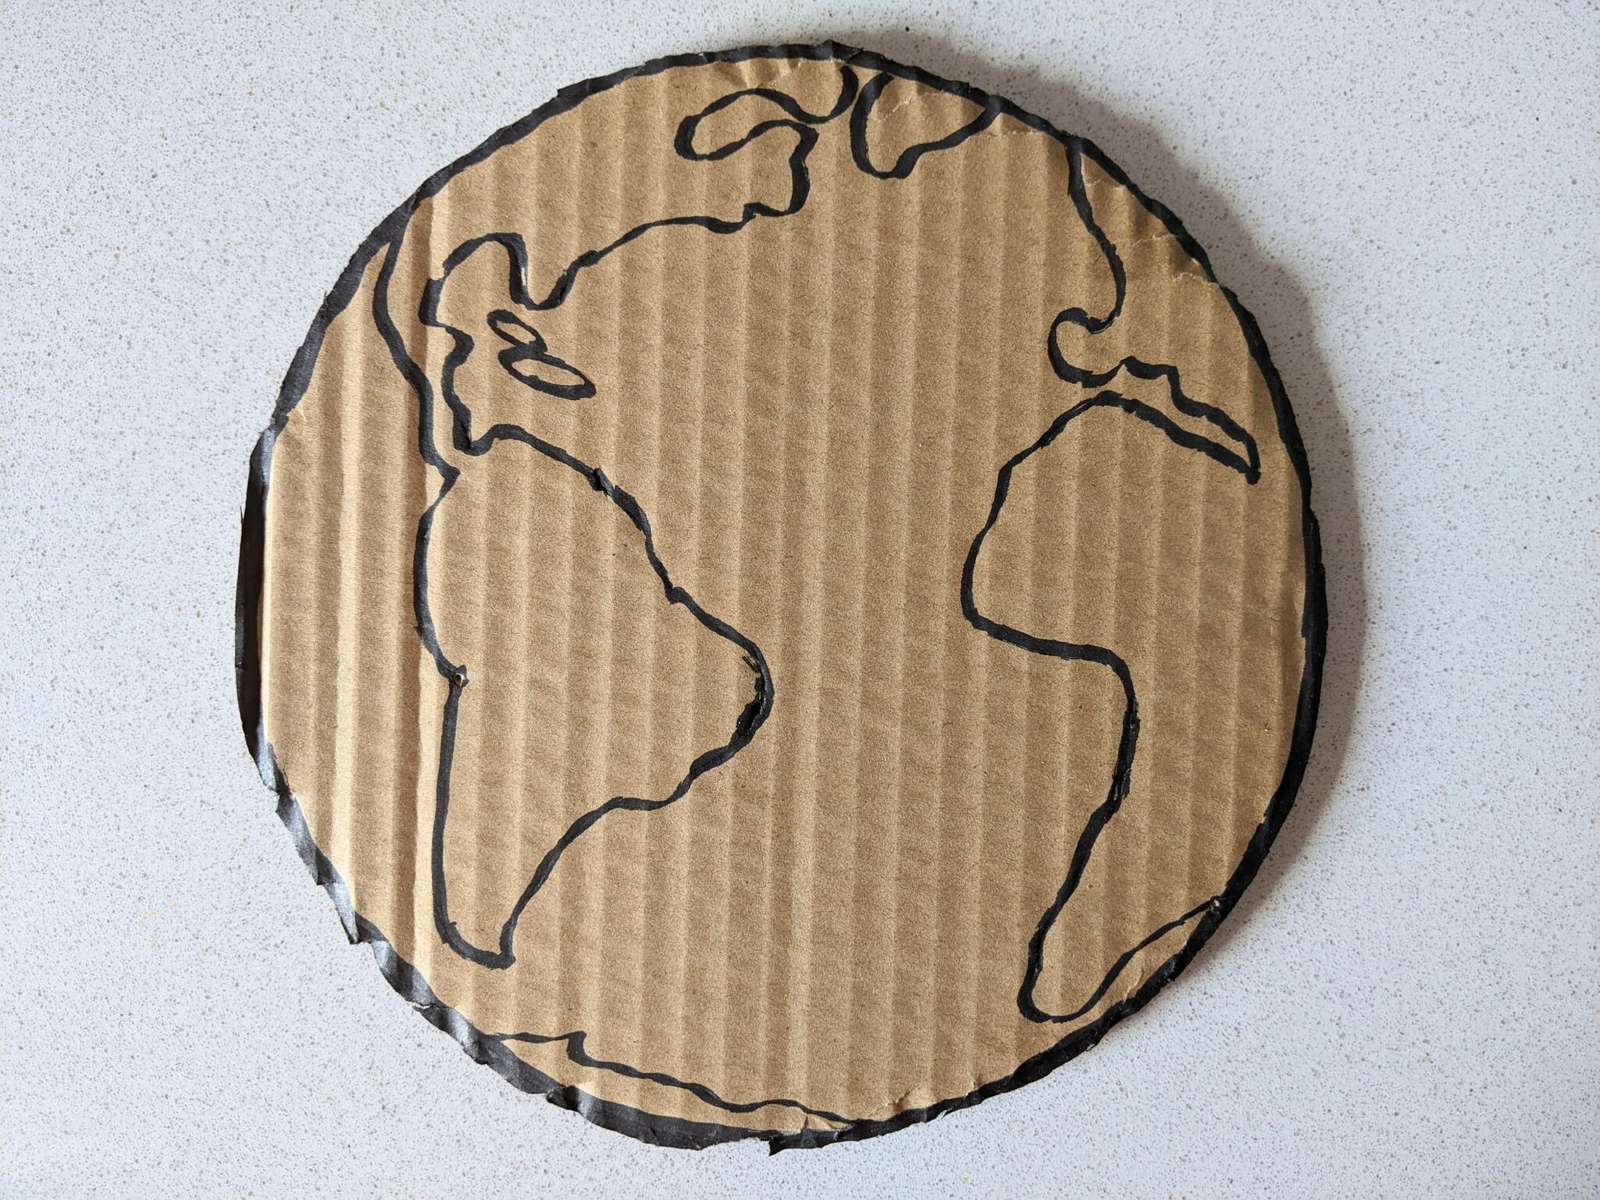 mappa del mondo puzzle online